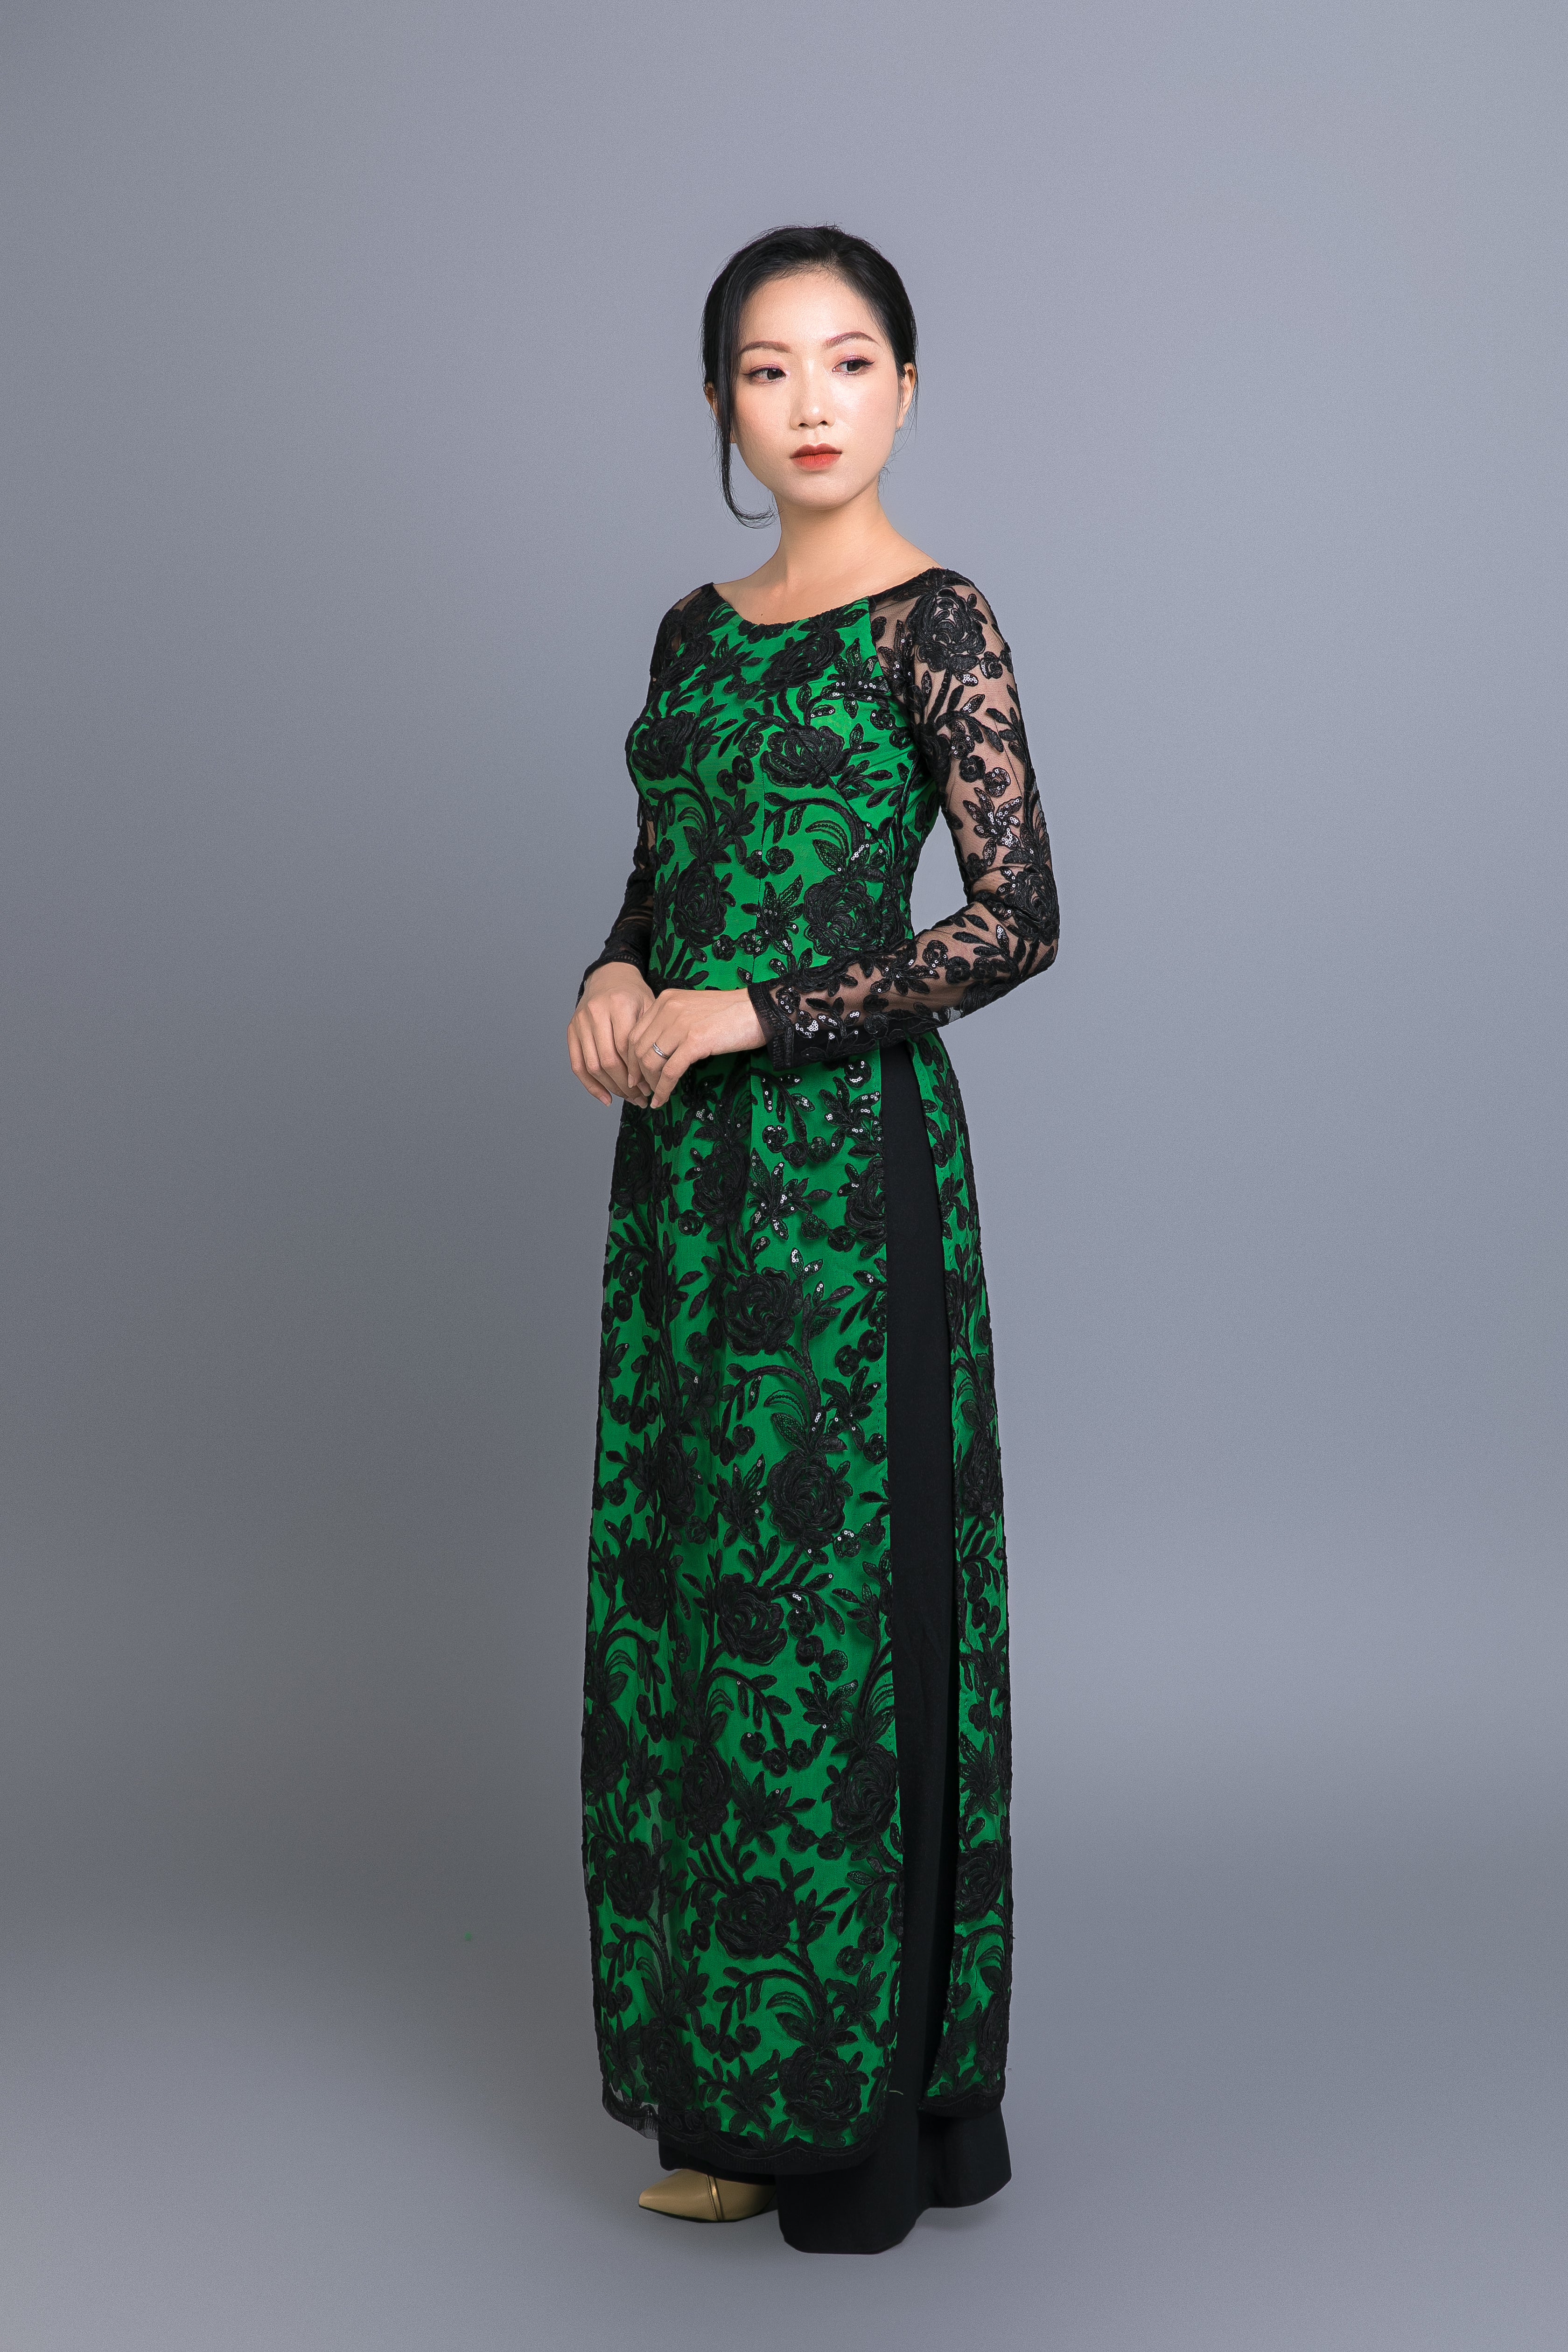 Custom Ao Dai. Black, floral motif lace over green, chiffon fabric